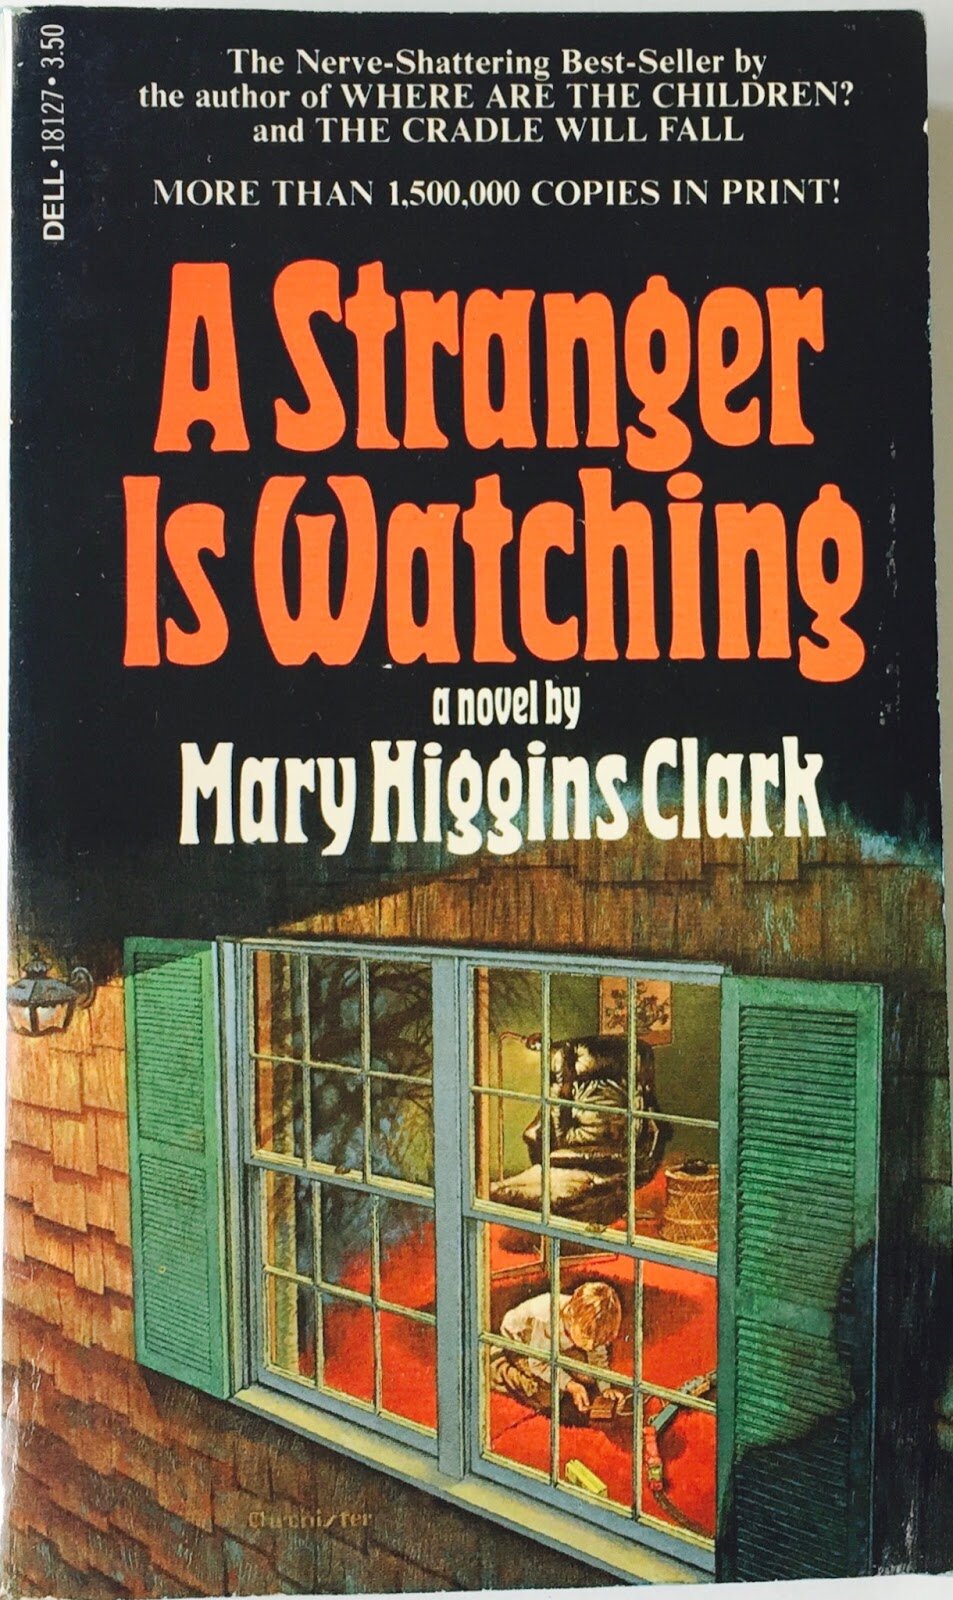 Goodbye Mary Higgins Clark